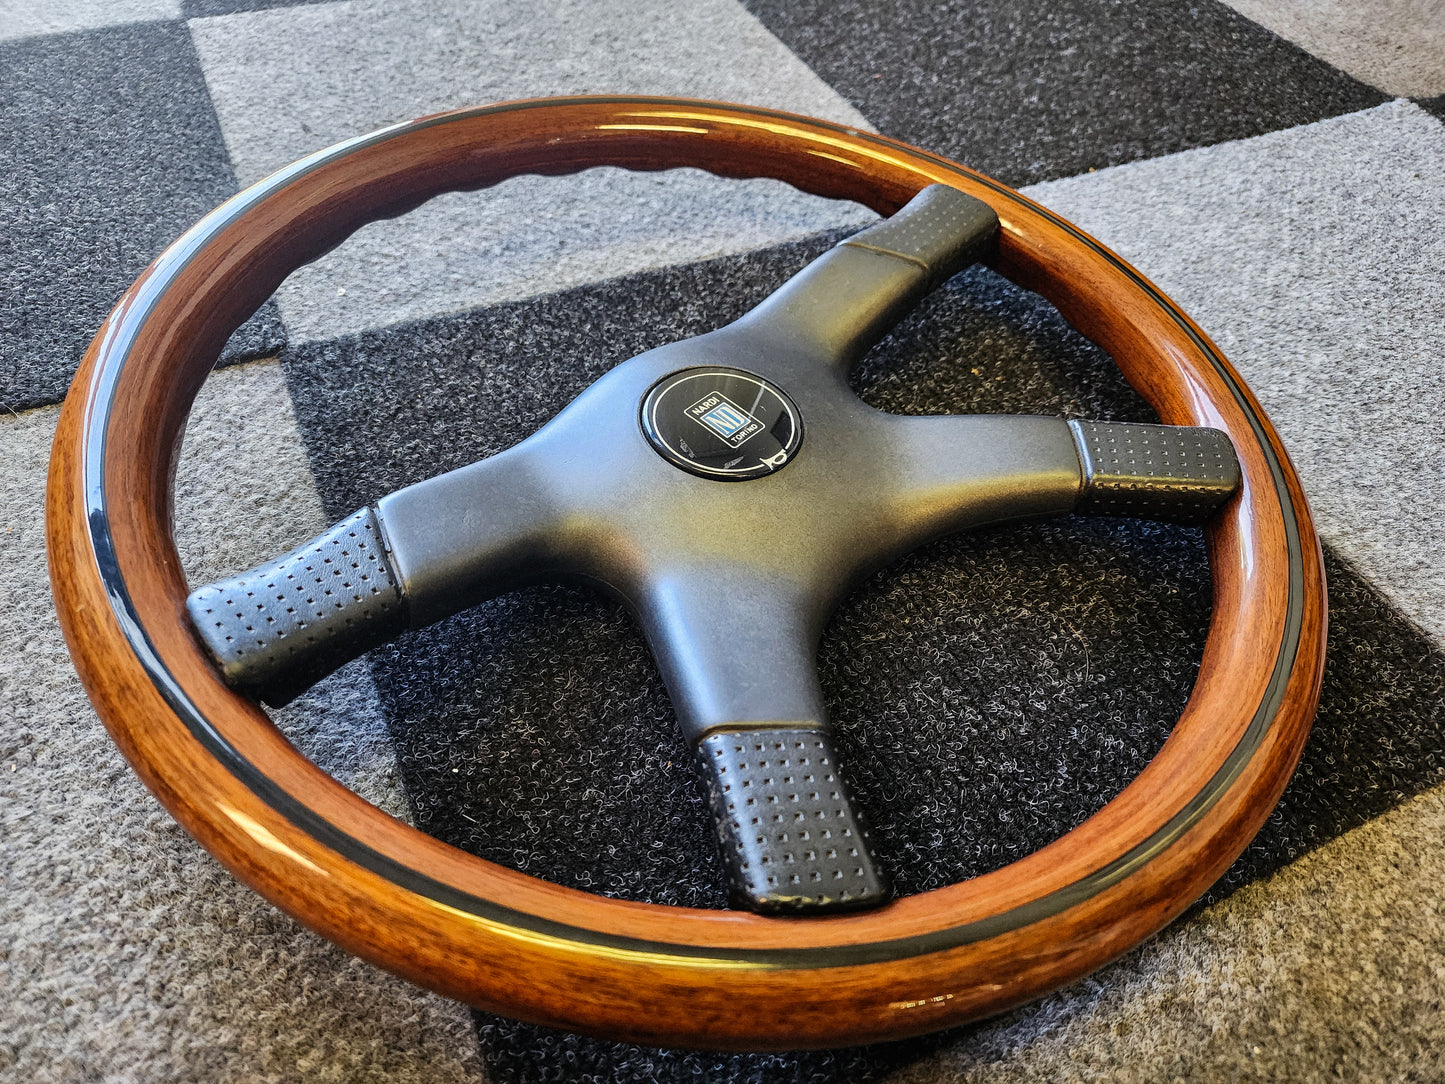 Nardi gara 4 spoke wood steering wheel